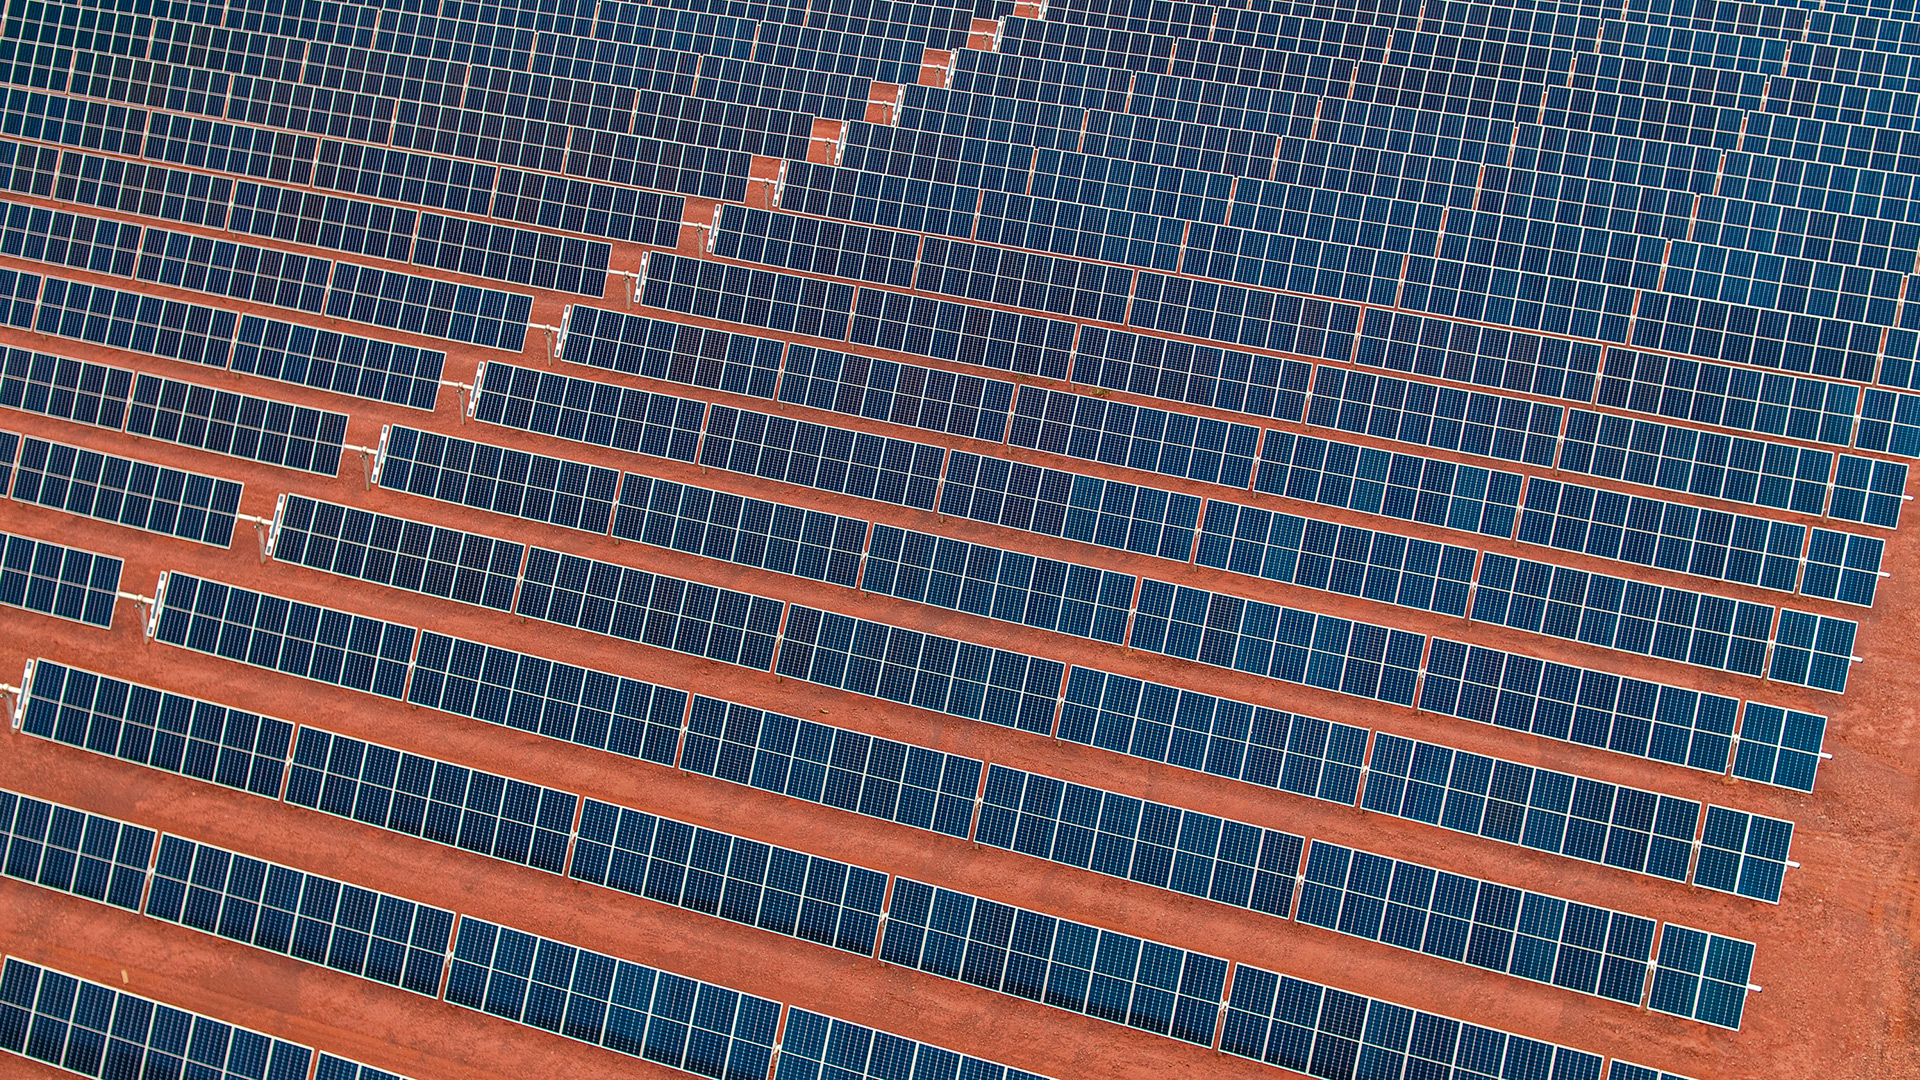 Gudai-Darri solar farm, Pilbara